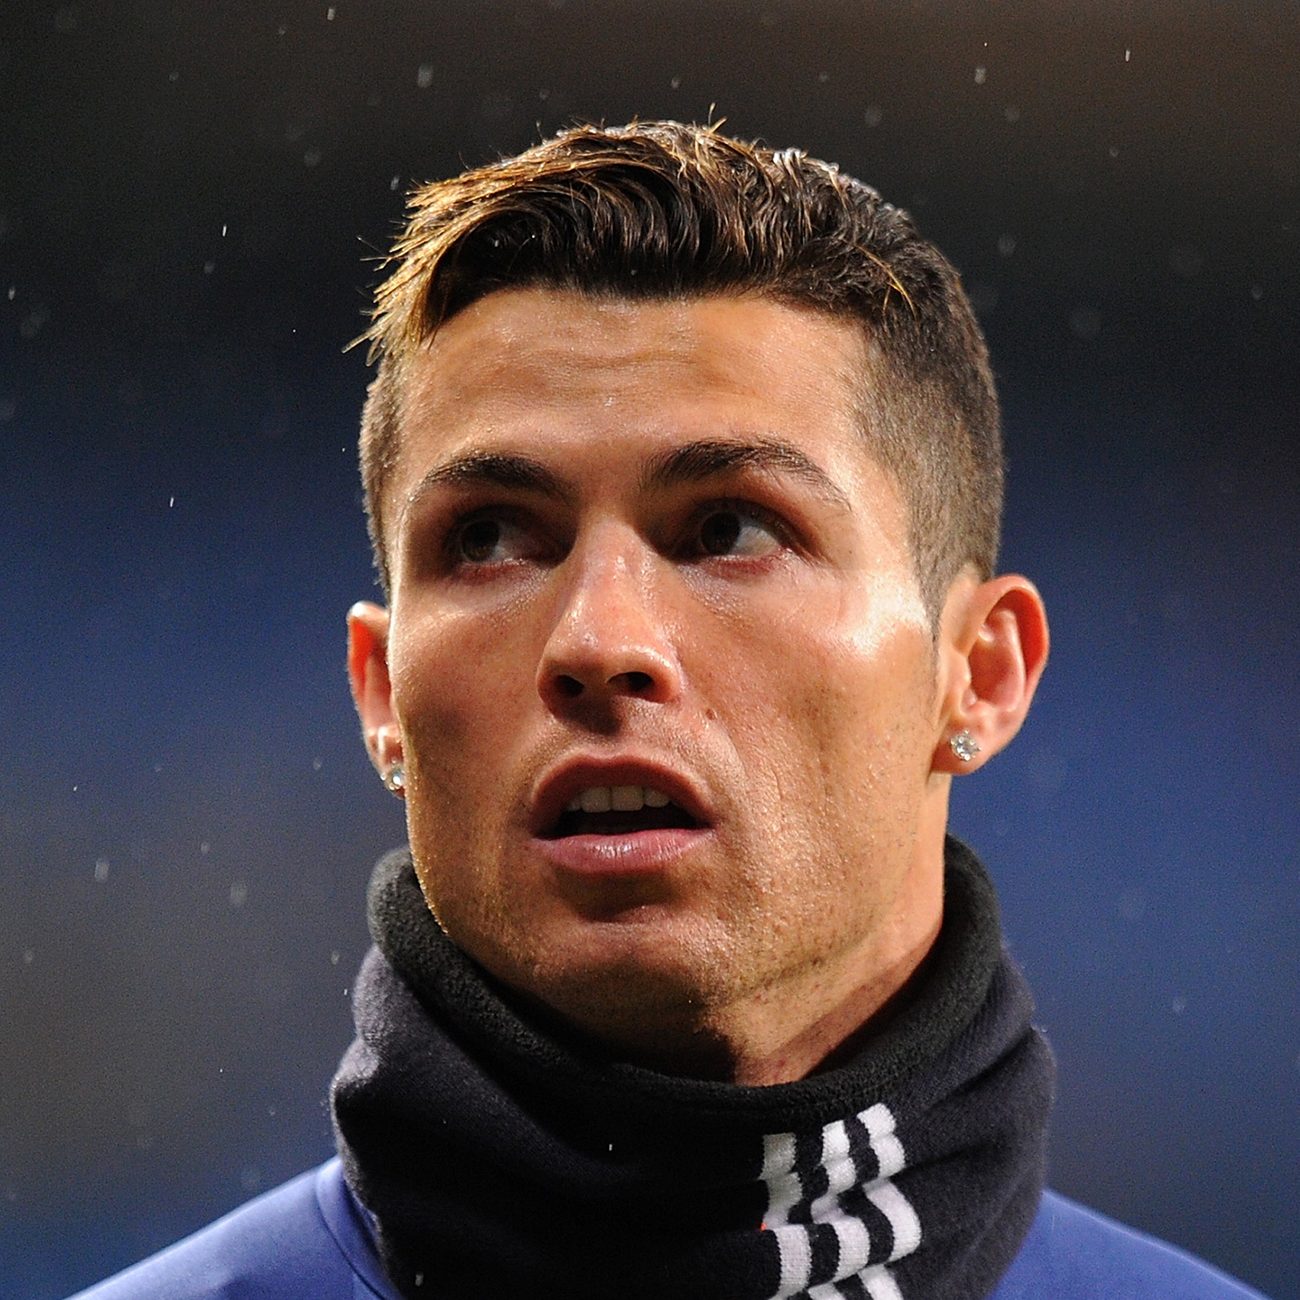 Cristiano-Ronaldo-haircut-The-Independent-e1494194936106